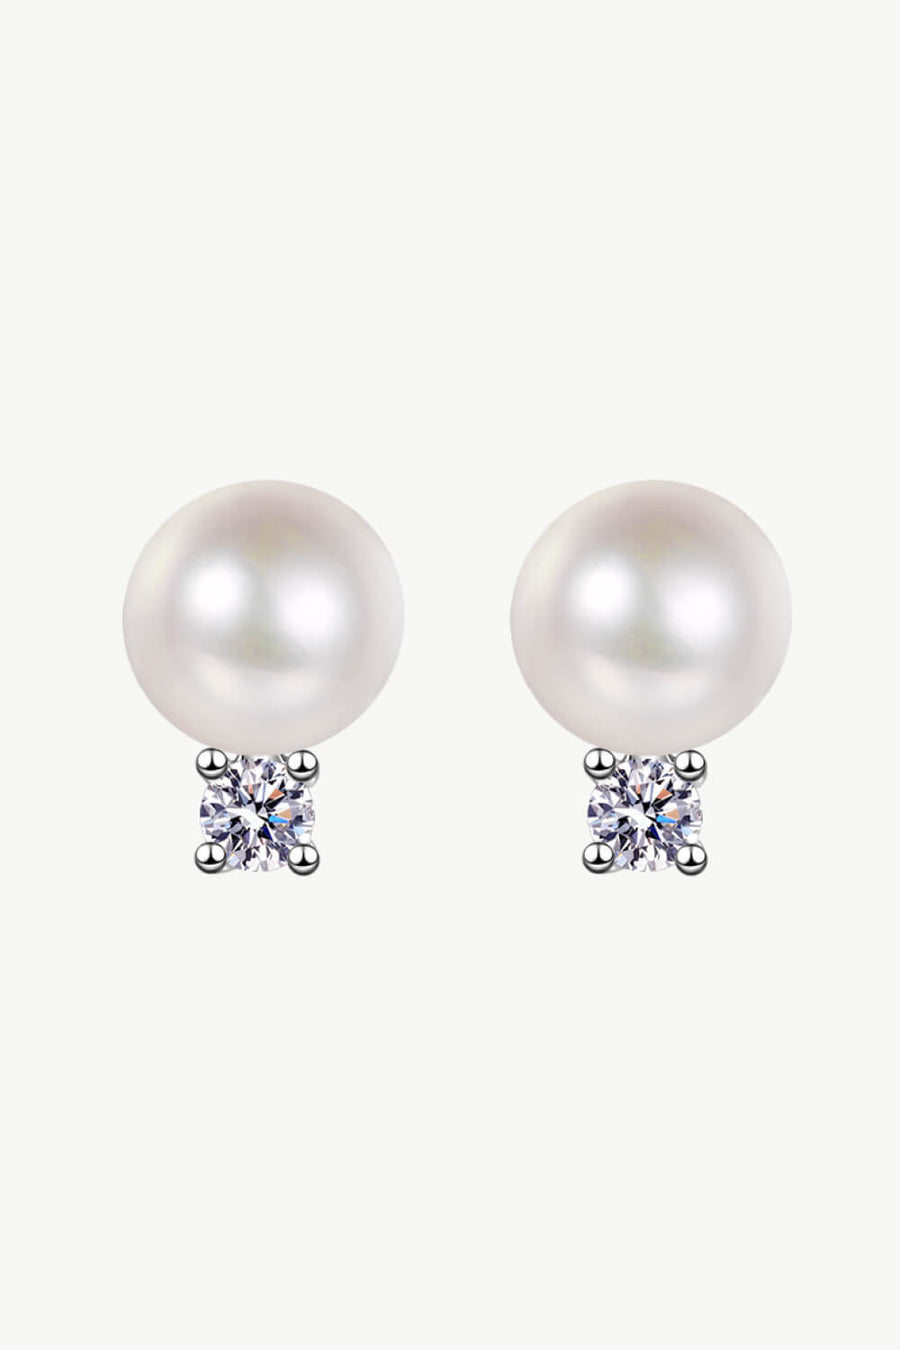 Best Diamond Pearl Stud Earrings Jewelry Gifts for Women | 0.5 Carat Diamond with Pearl Stud Earrings | MASON New York